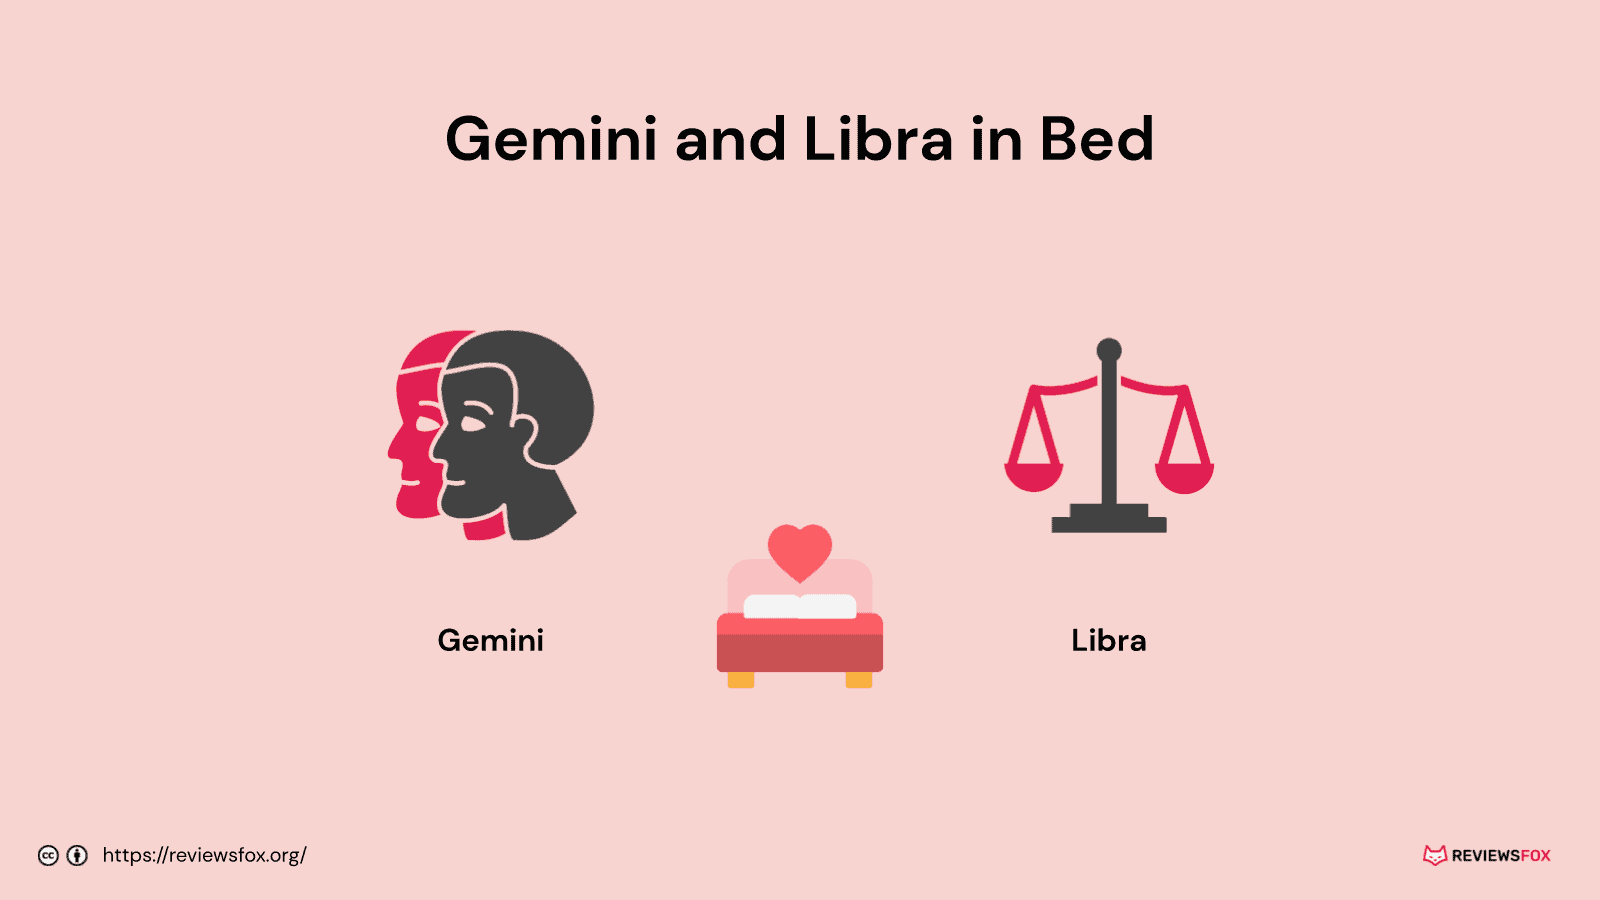 Gemini and Libra in bed